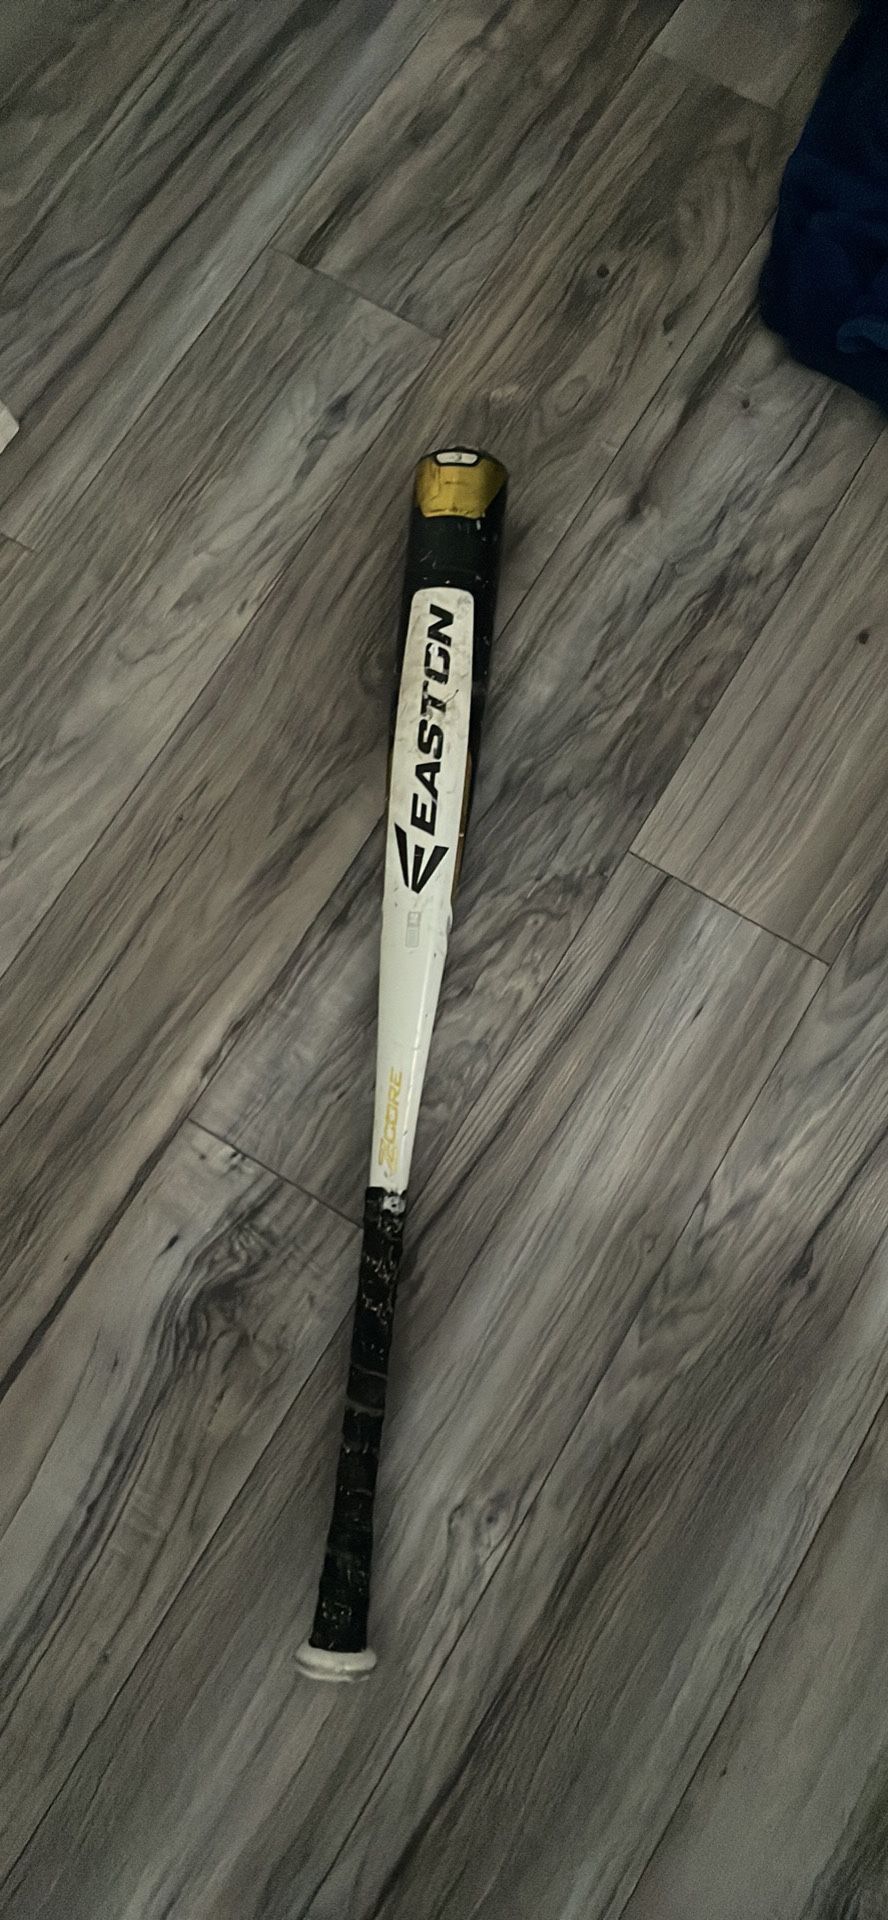 Eaton x Bbcor Baseball bat